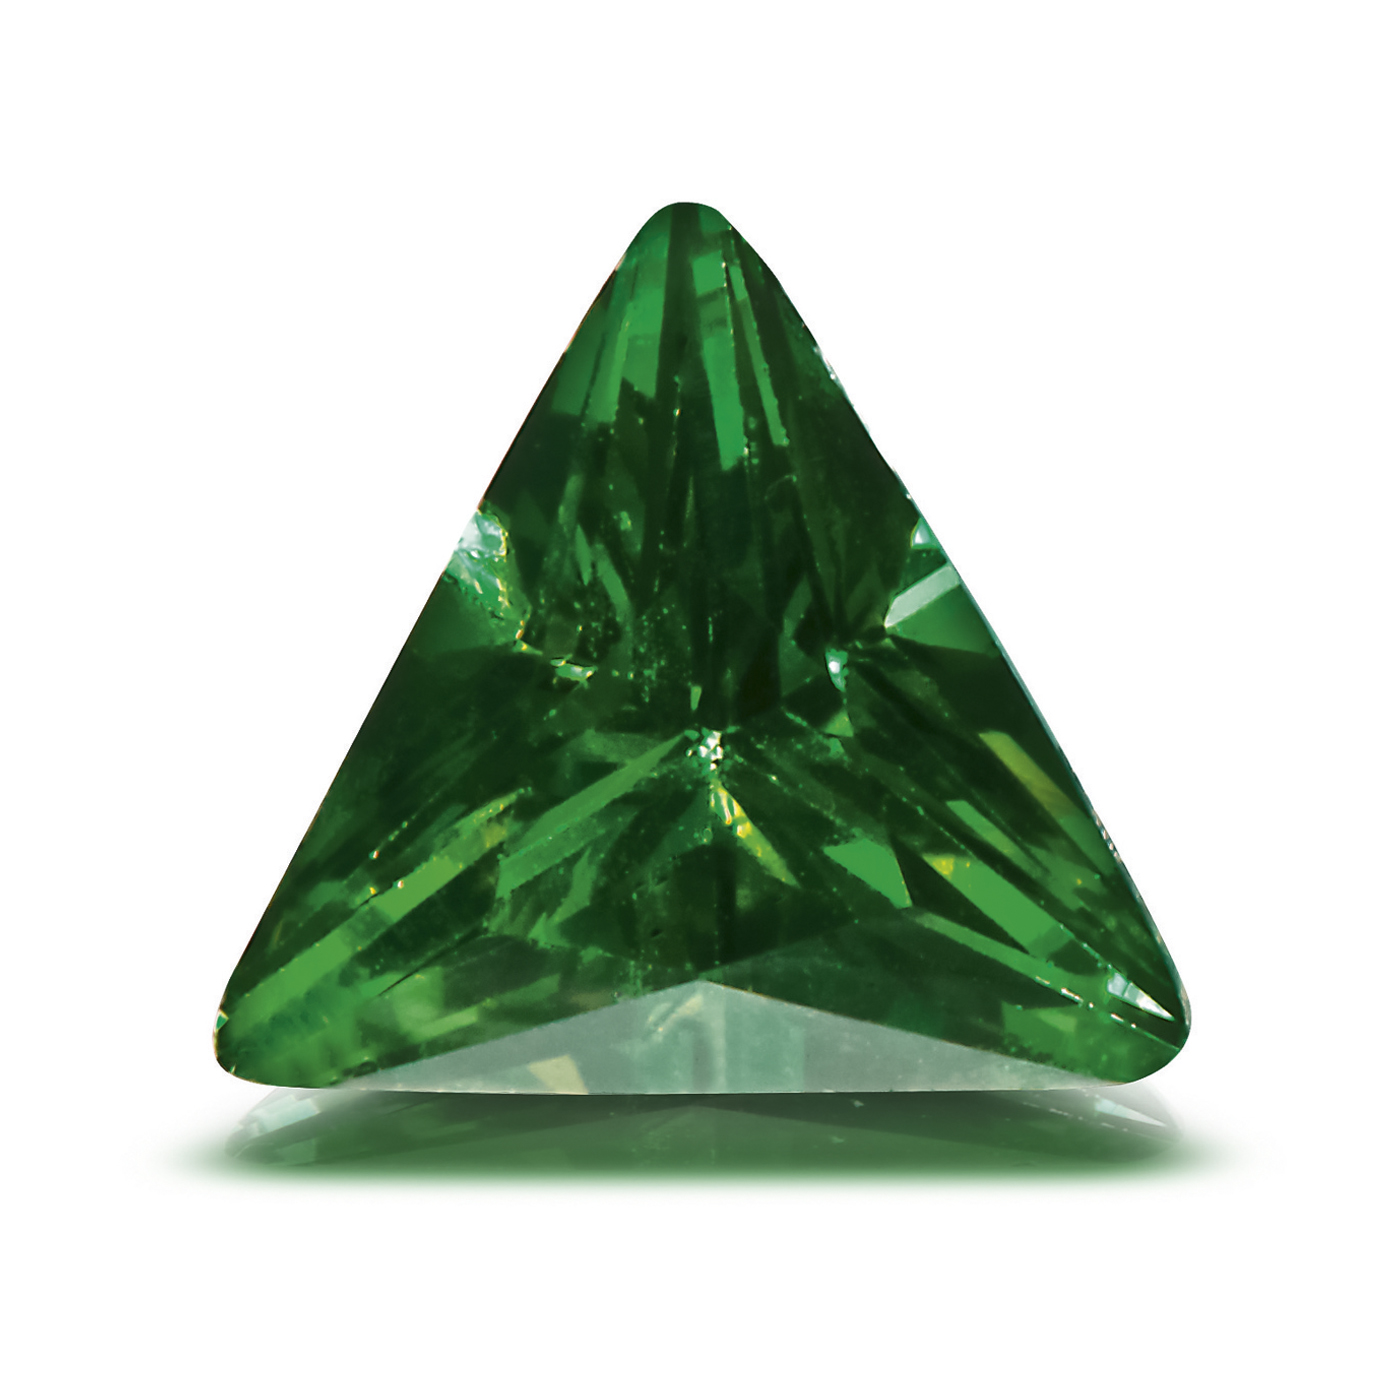 Zirconia, Triangular, Emerald Green, Faceted, 3.00 mm - 5 pieces